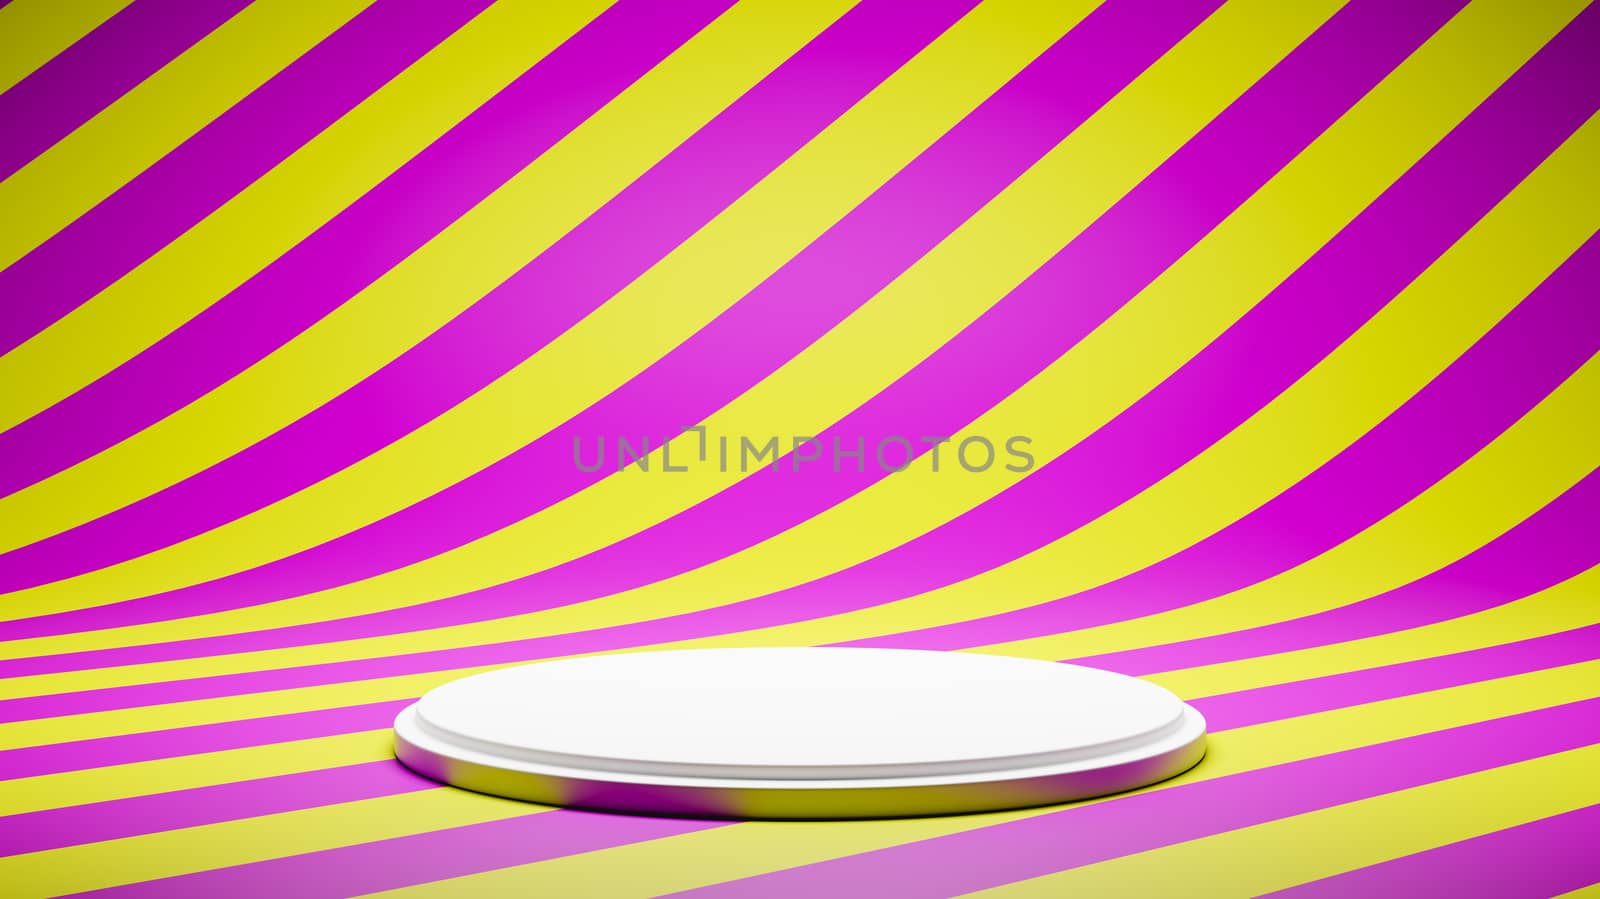 Empty White Platform on Purple and Yellow Striped Pattern Studio Background 3D Render Illustration